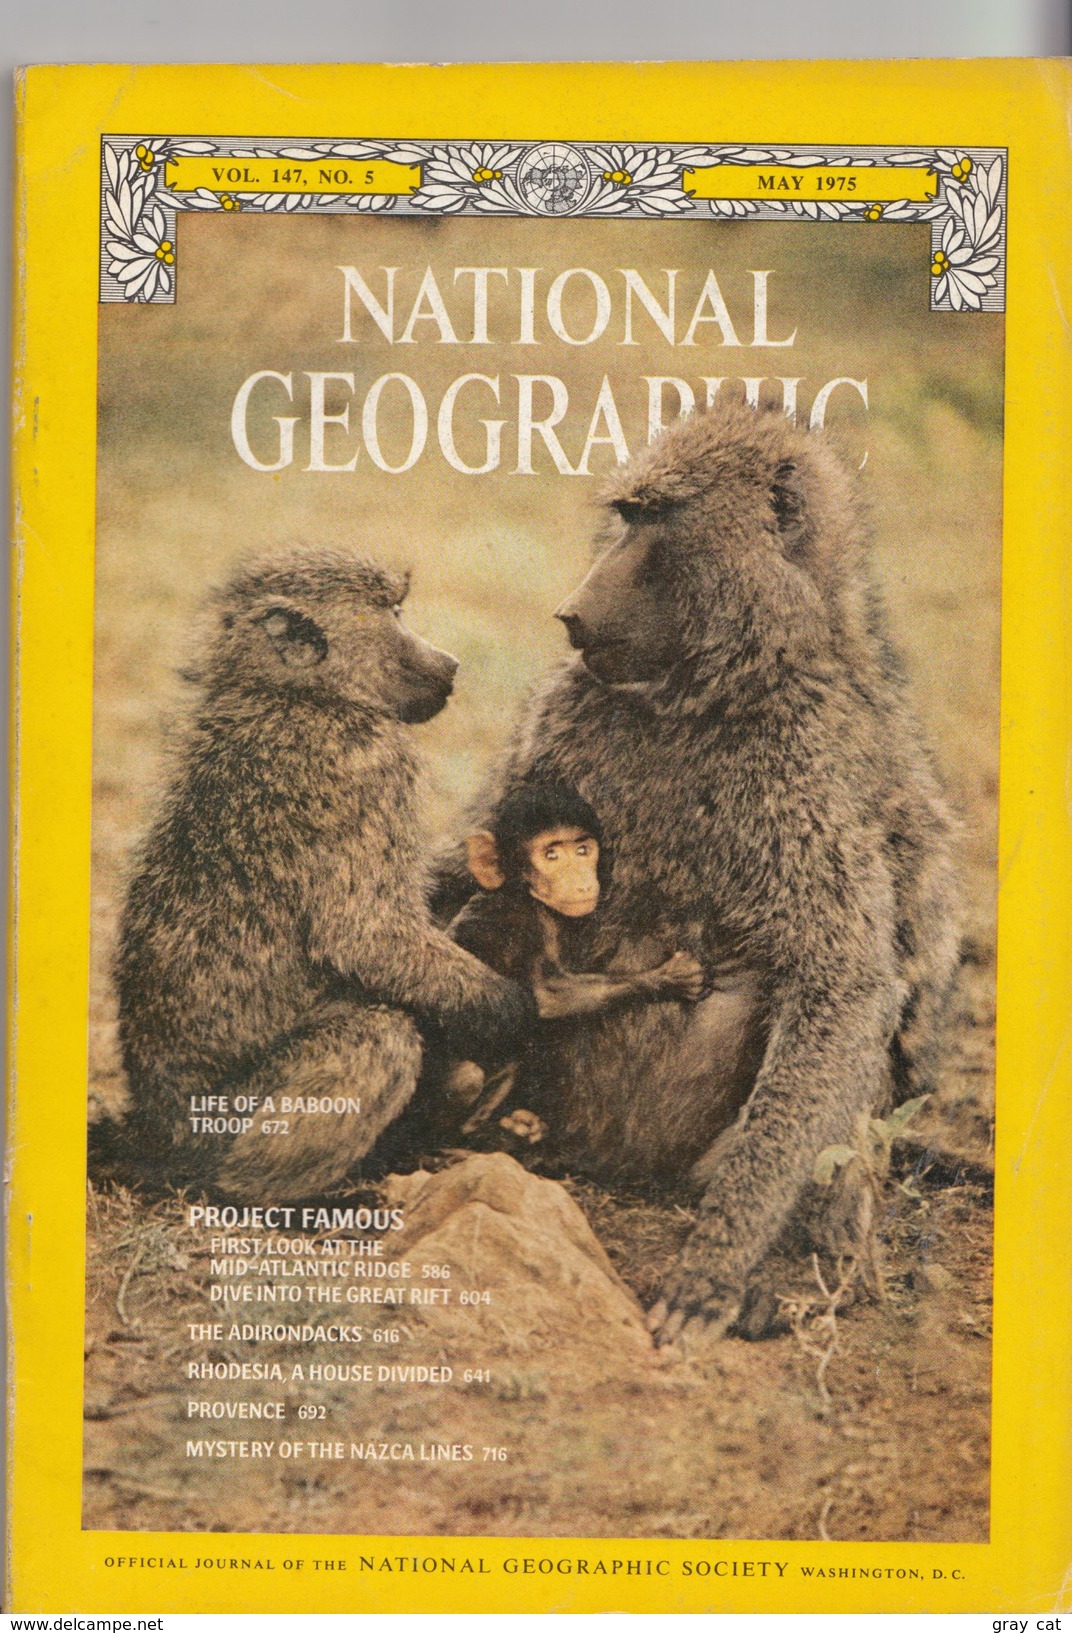 National Geographic Magazine Vol. 147, No. 5, May 1975 - Voyage/ Exploration